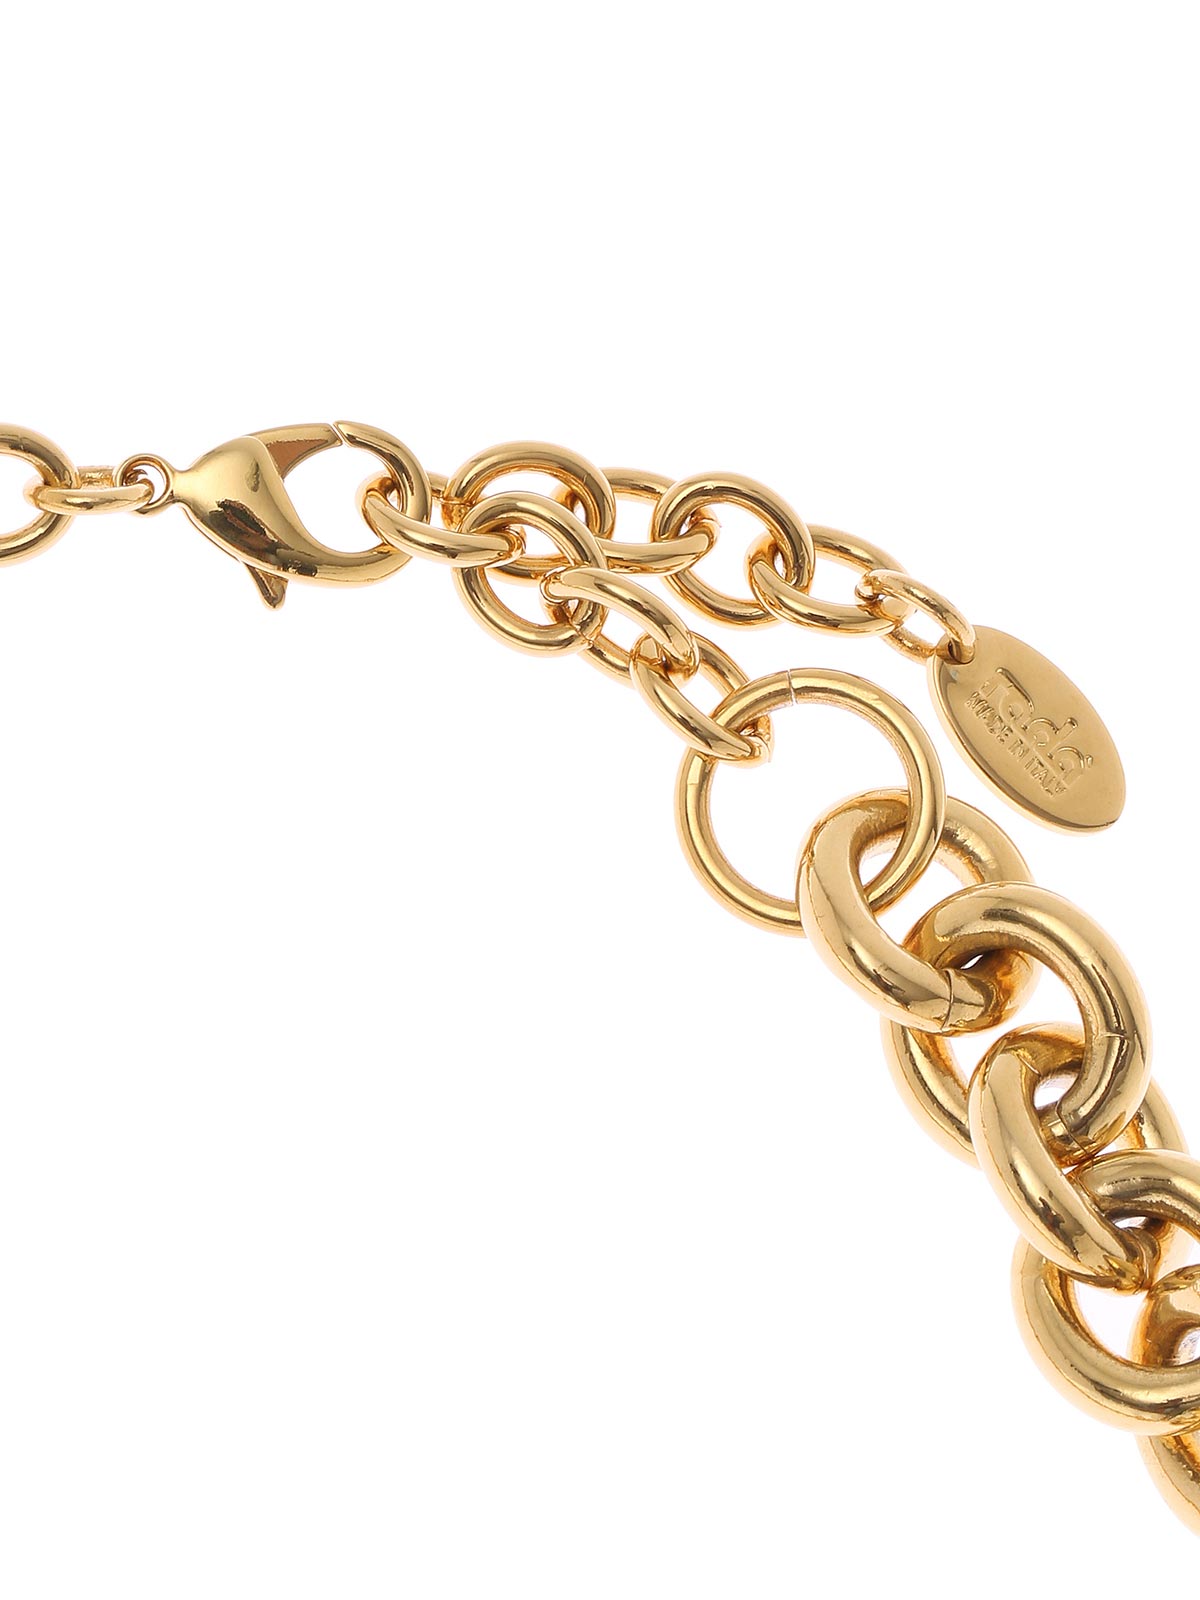 Brass chain necklace